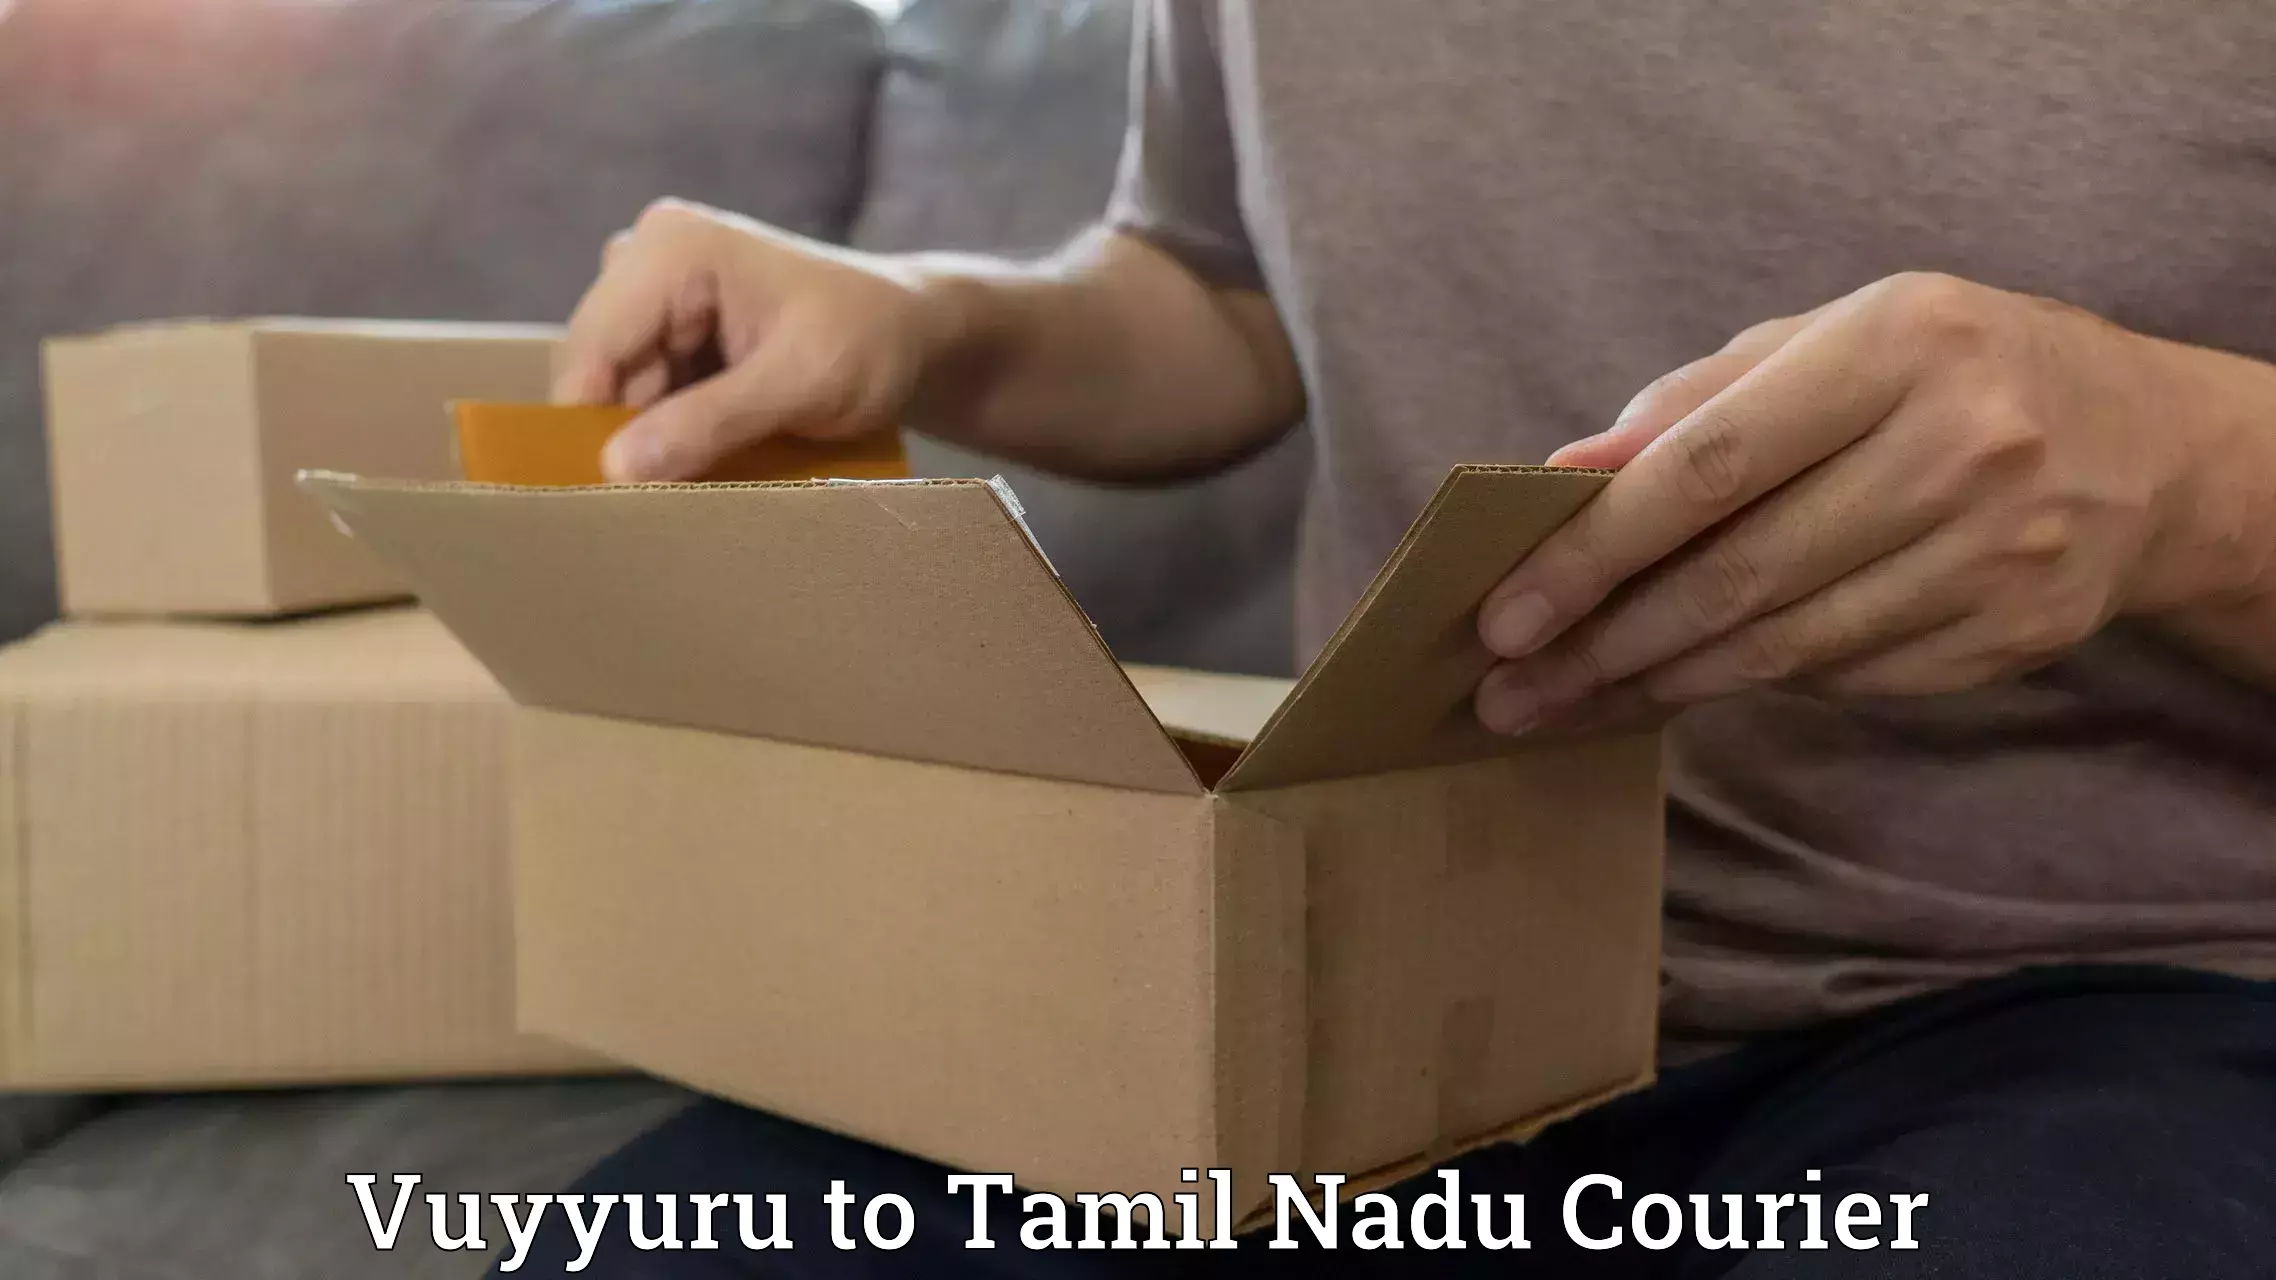 Global courier networks Vuyyuru to Tiruppur